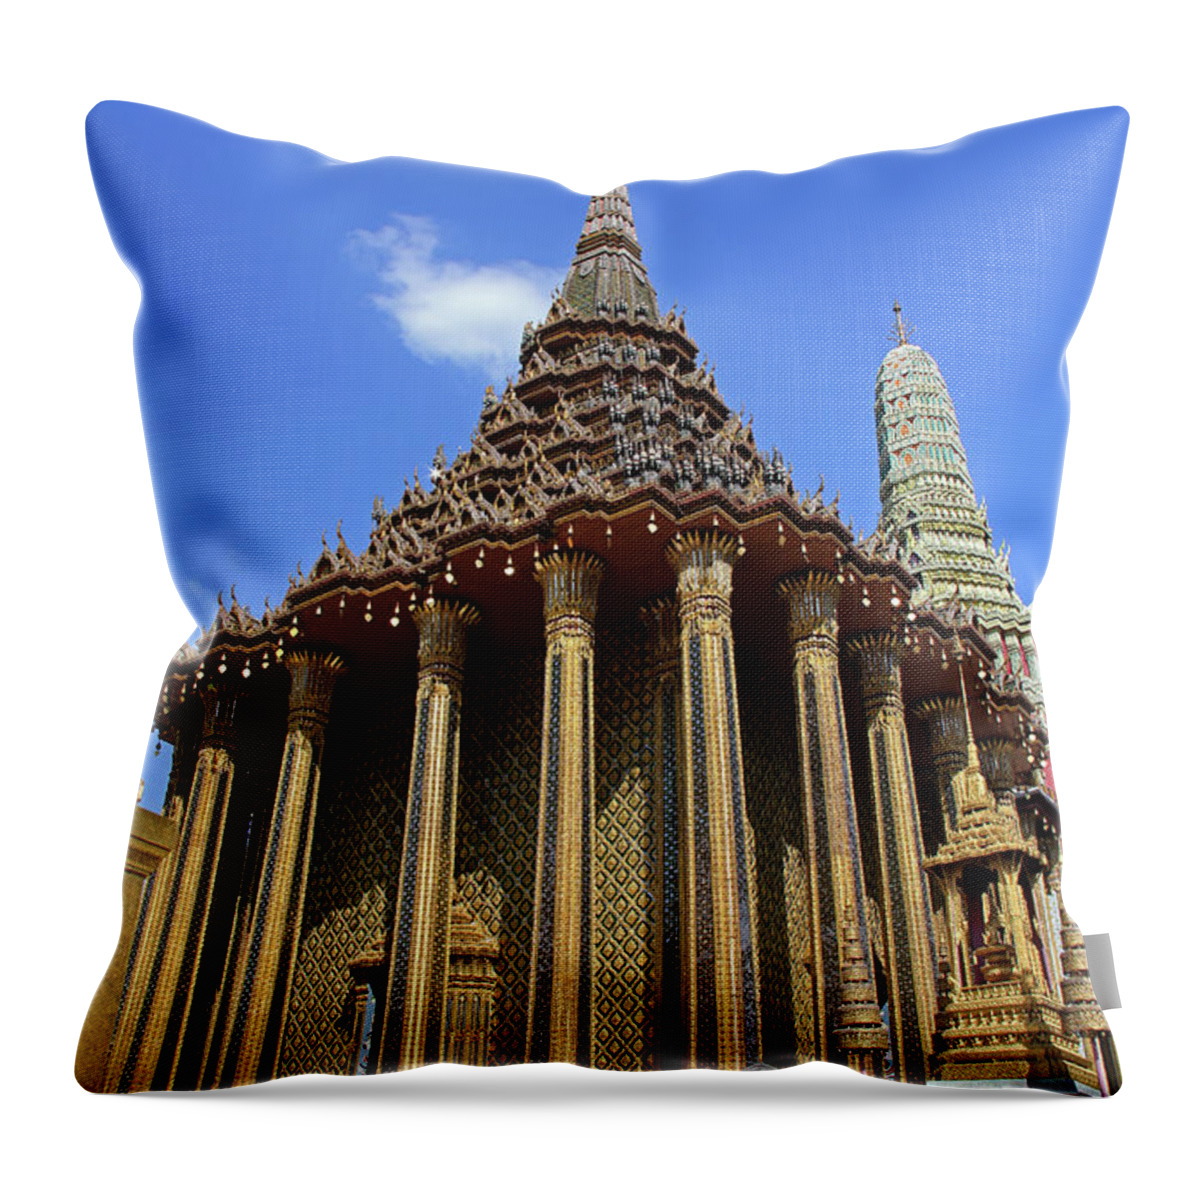 Bangkok Throw Pillow featuring the photograph Bangkok, Thailand - Wat Phra Kaew - Temple Of The Emerald Buddha by Richard Krebs